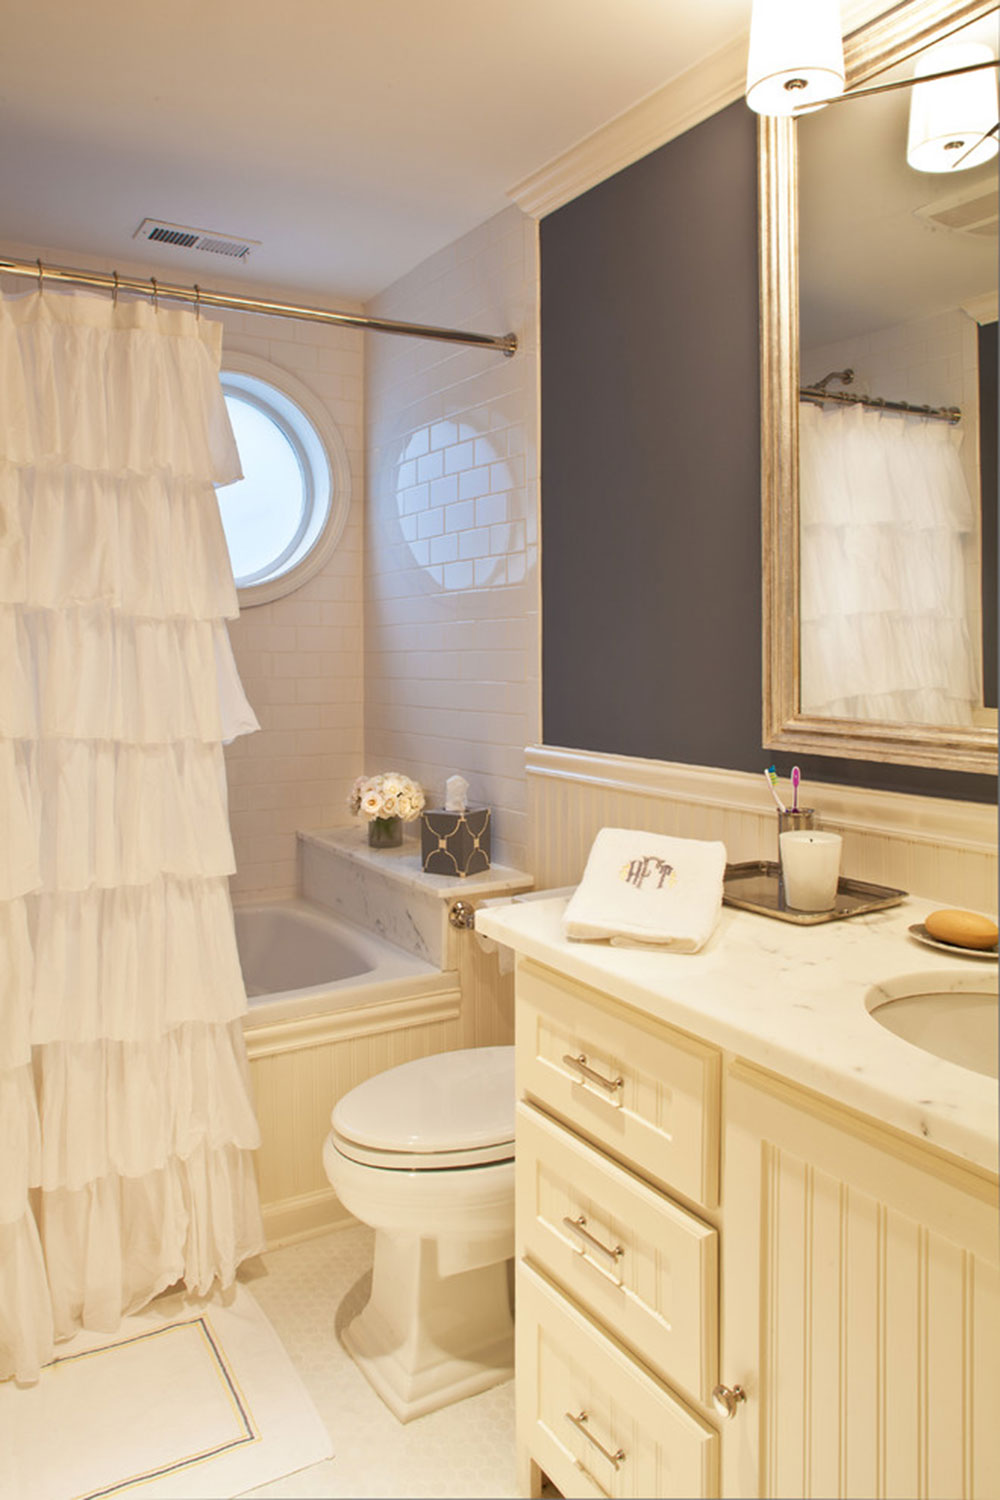 Enhance your bathroom appearance with trendy shower curtains1 Trendy shower curtains for your bathroom